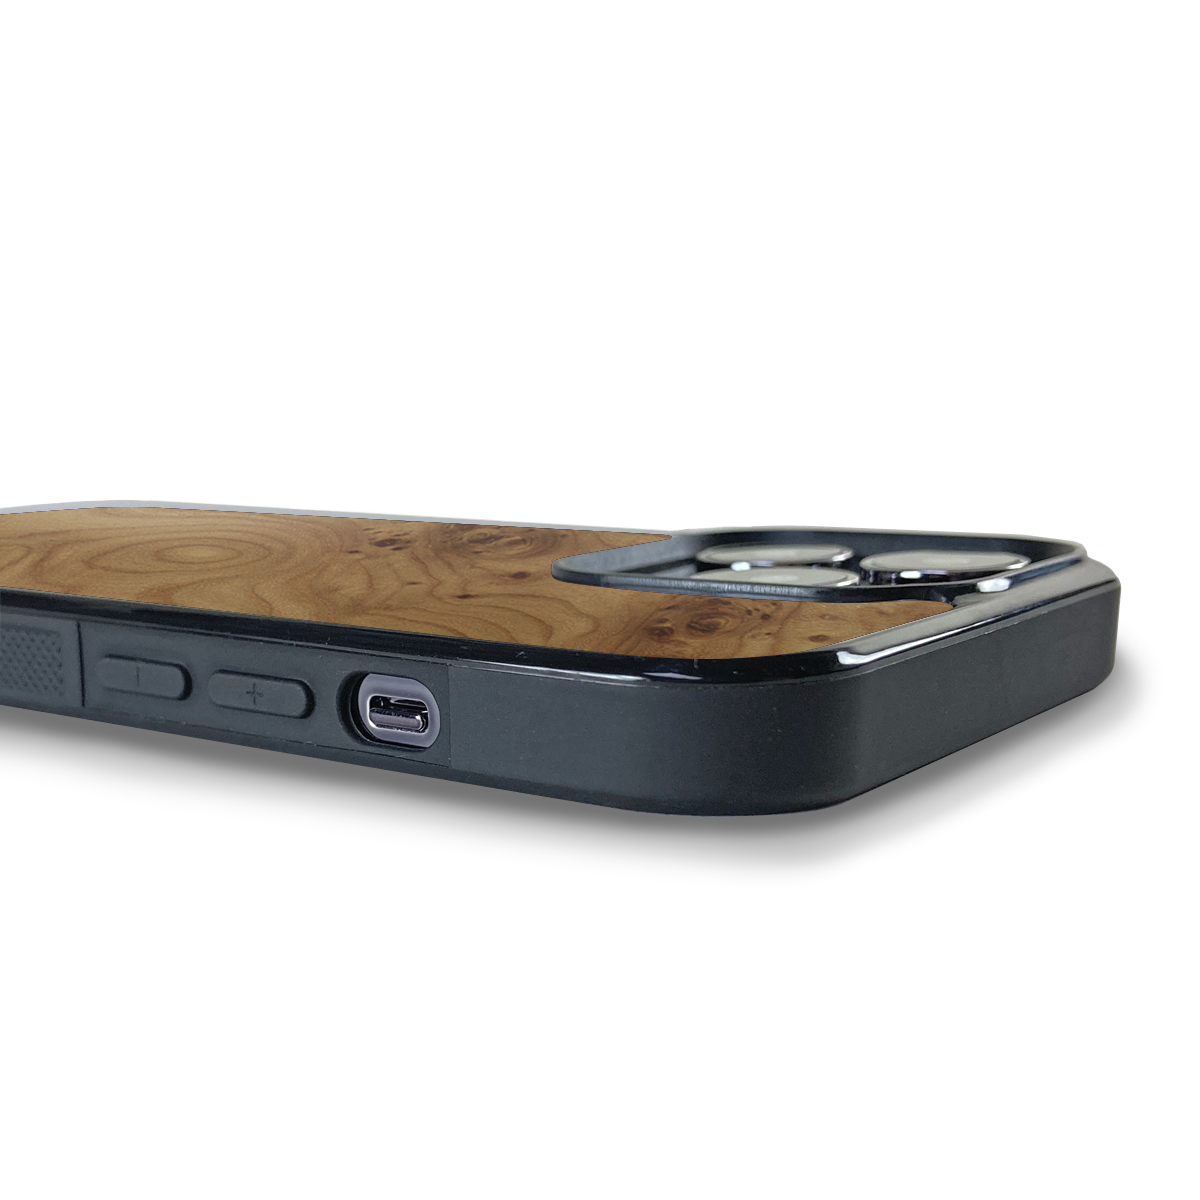 iPhone 14 Pro Max —  #WoodBack Explorer Black Case